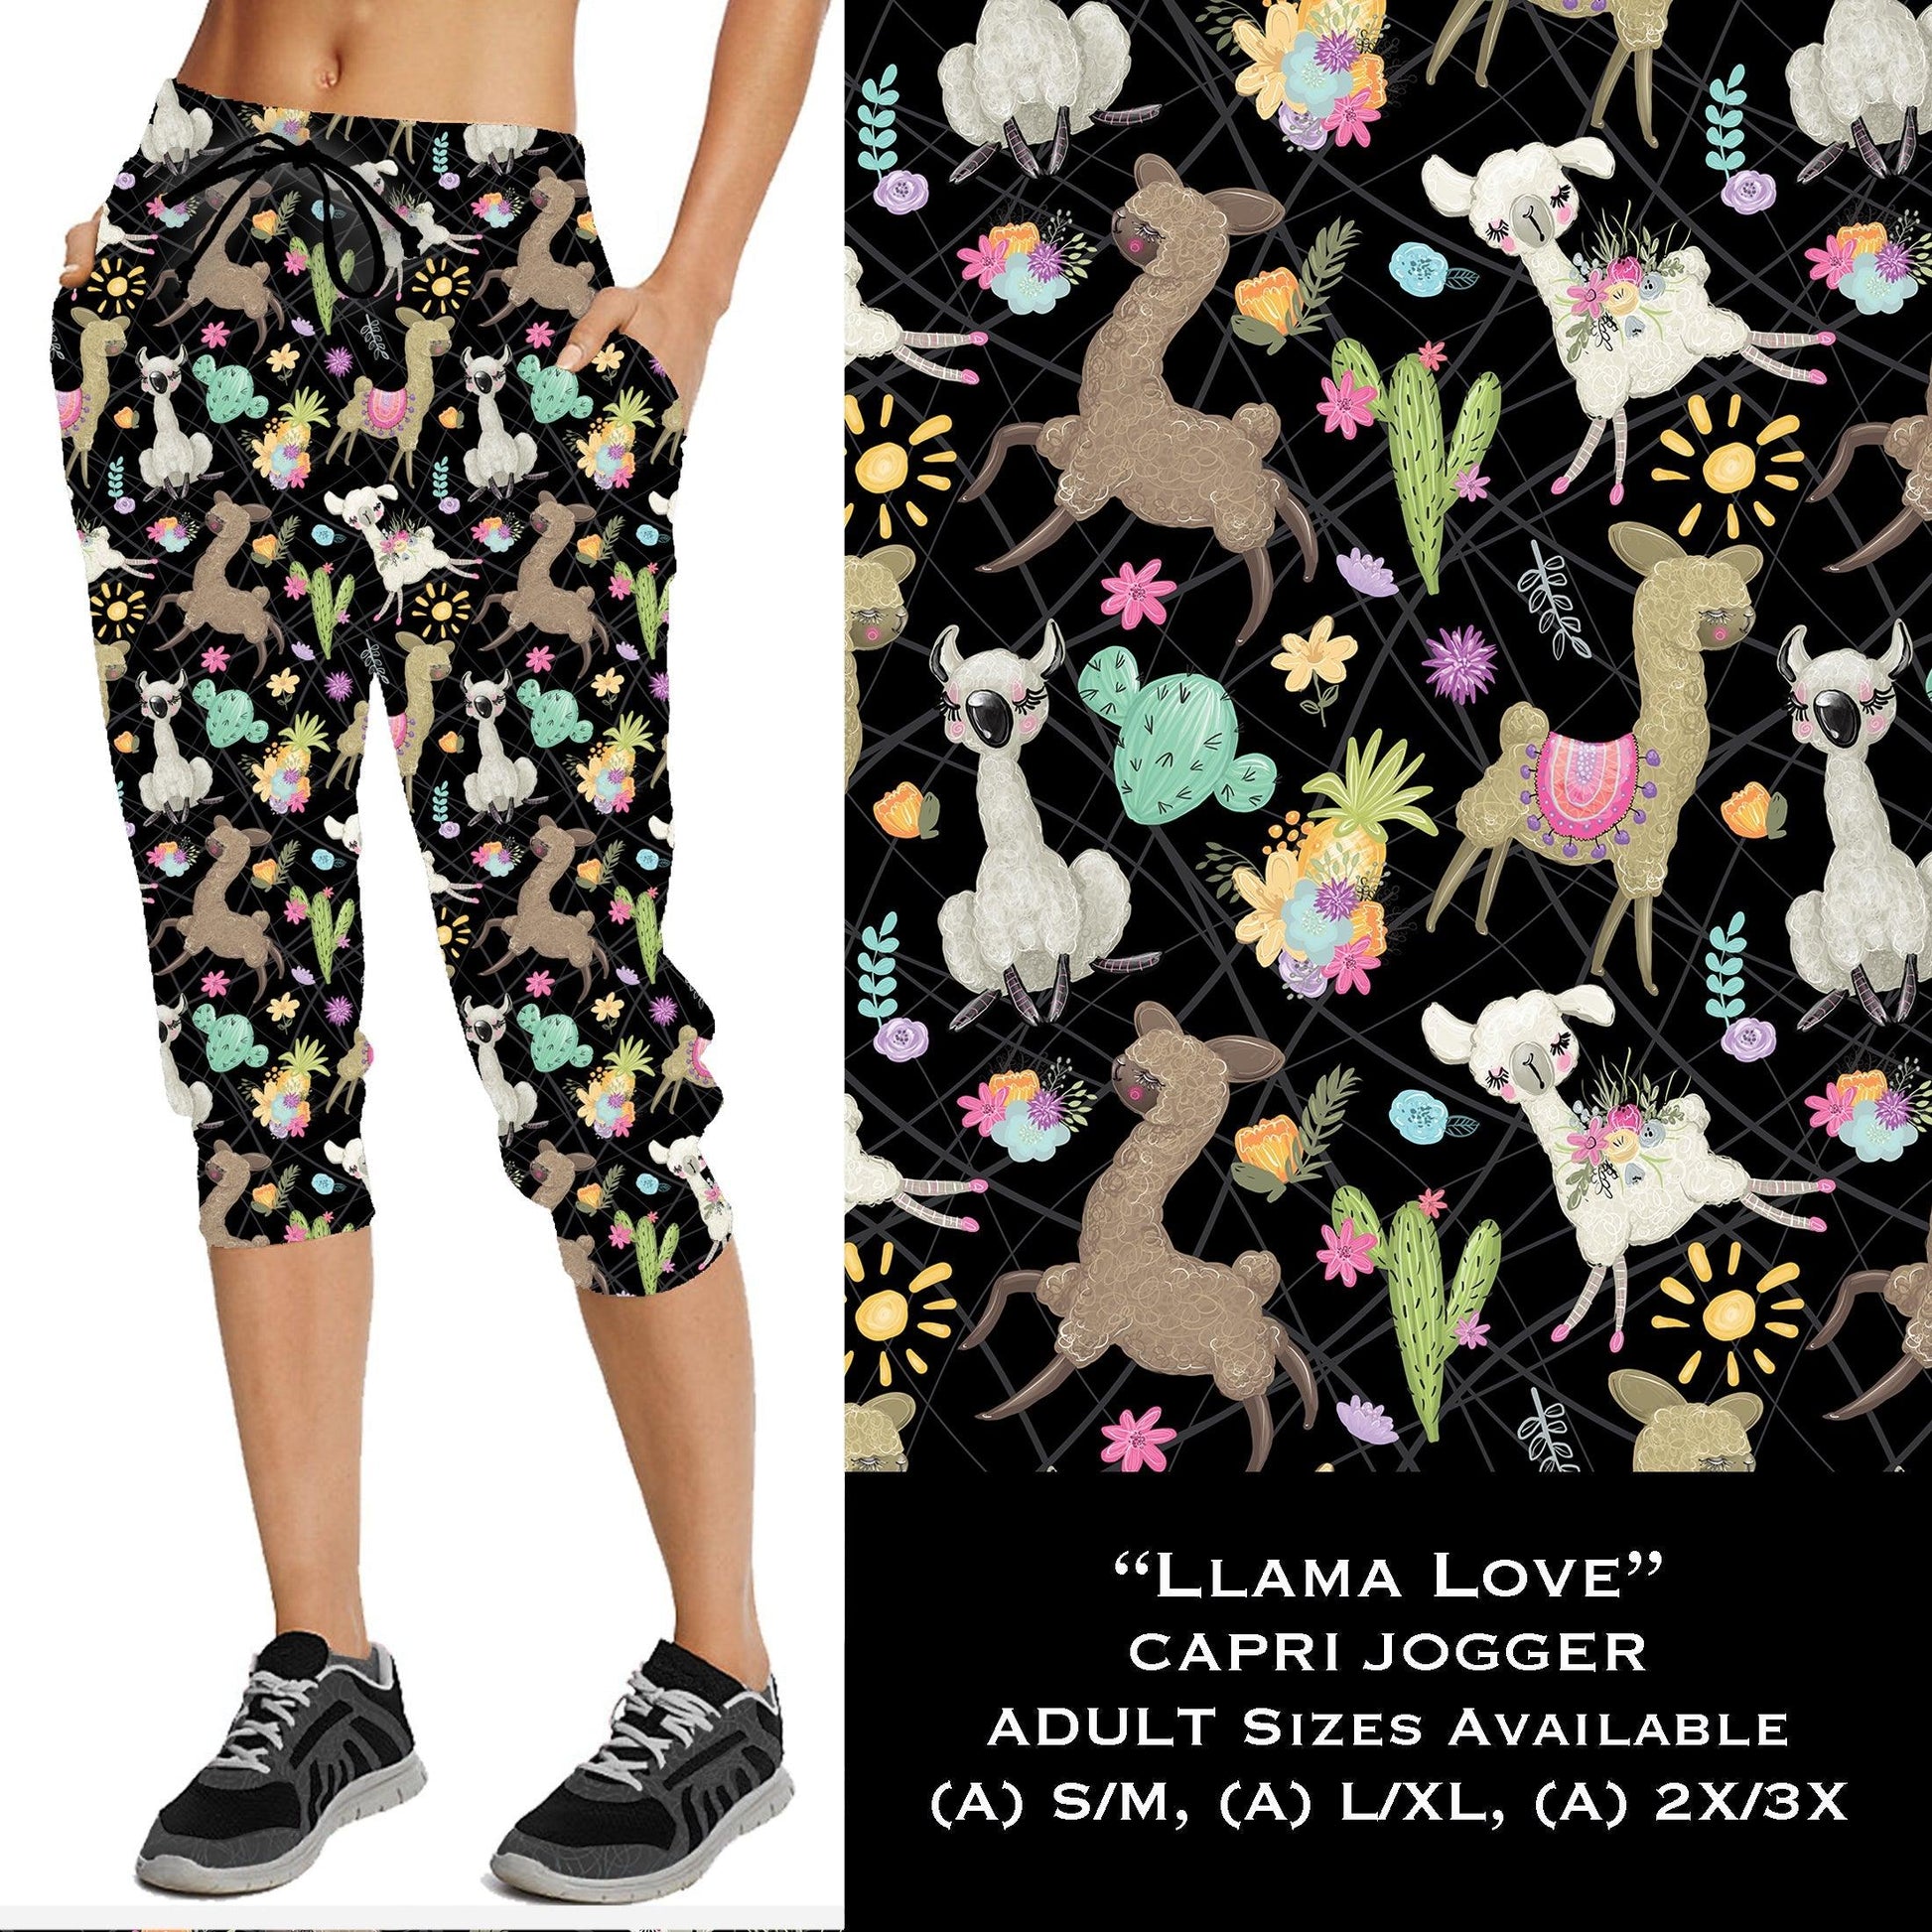 Llama Love - Full & Capri Joggers - That’s So Fletch Boutique 